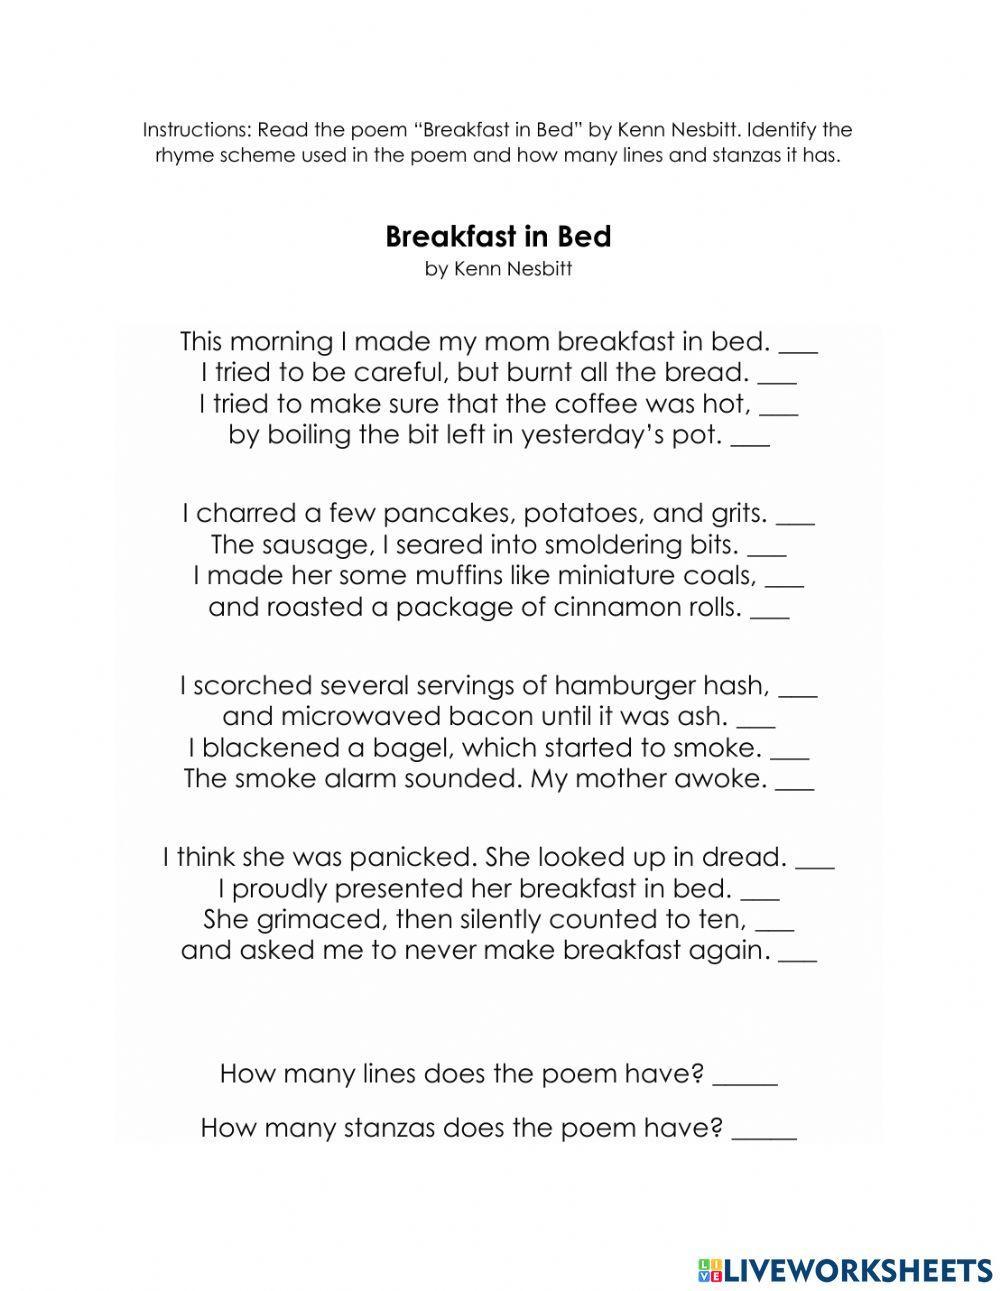 Rhyme Scheme: -Breakfast in Bed- poem